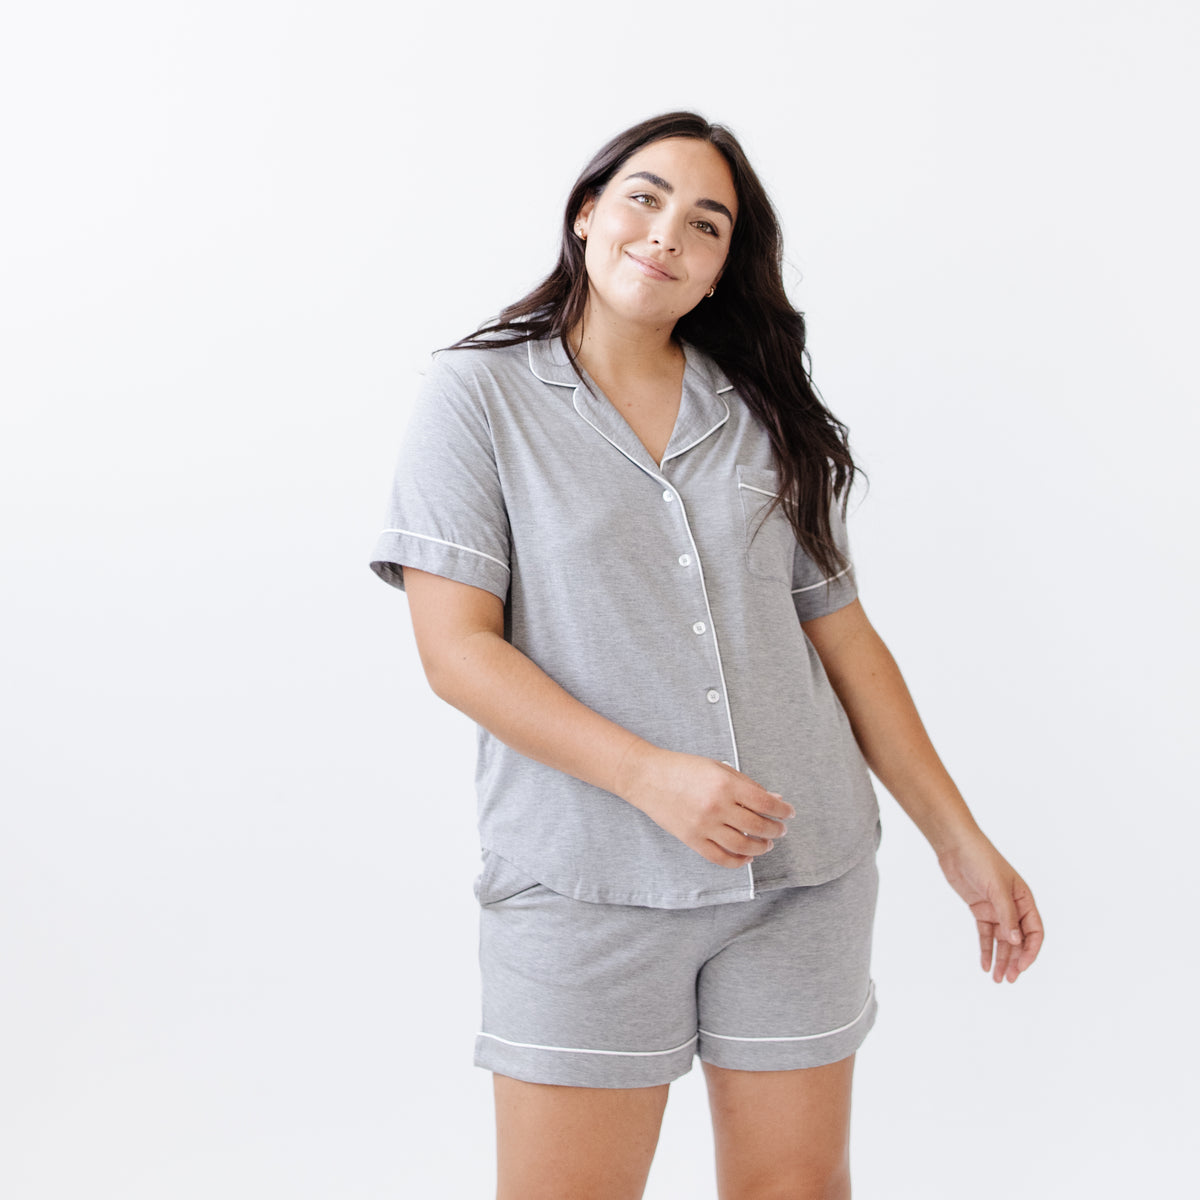 The 9 Best Pajama Shorts Sets for Springtime Sleeping